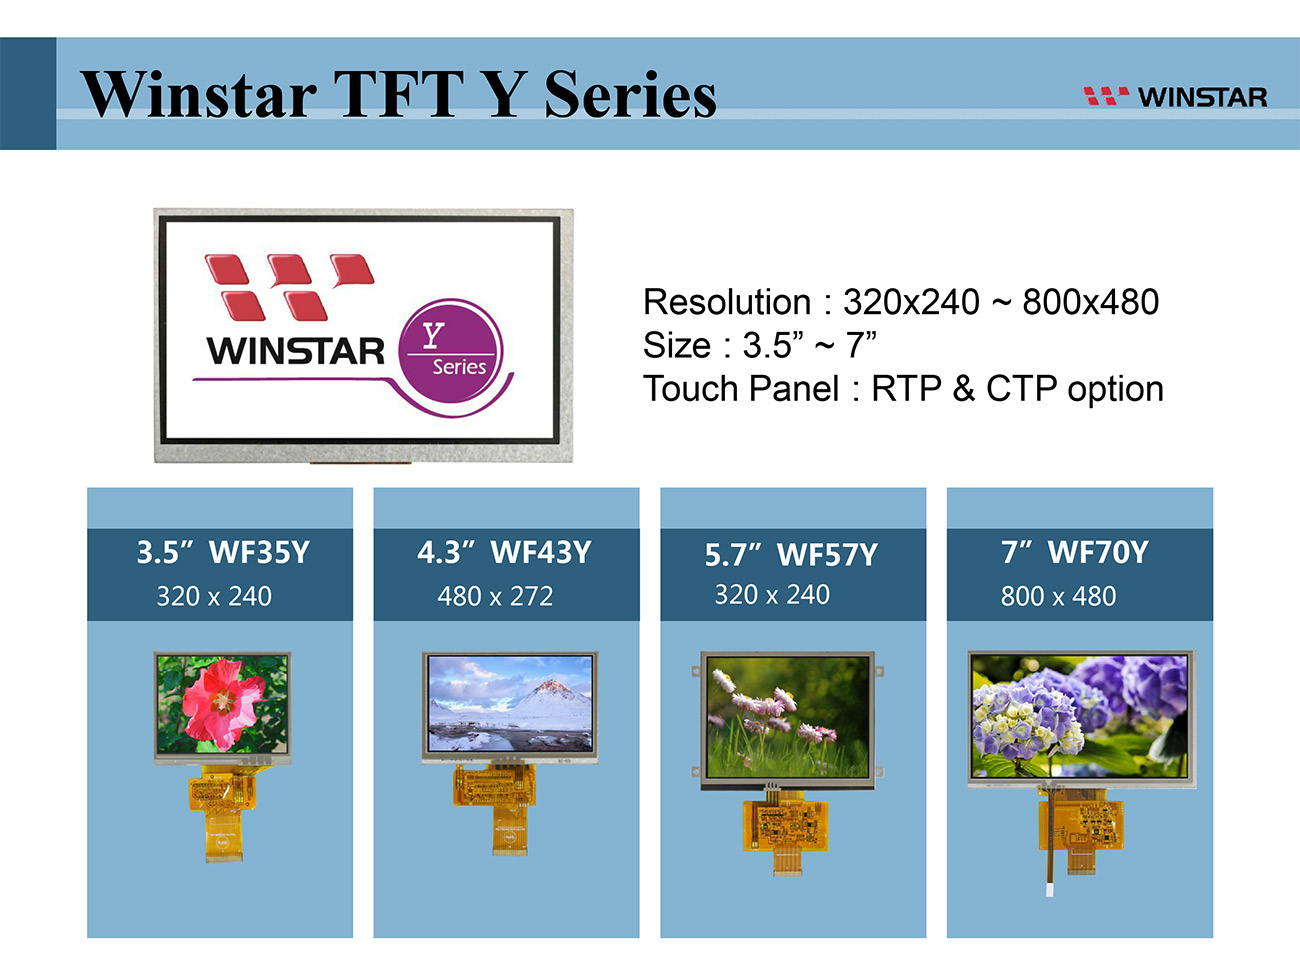 Winstar TFT LCD - Y Serisi - 3.5 tft lcd, 3.5" tft lcd, tft lcd 3.5, tft lcd 3.5", 3.5 tft display, tft display 3.5, 4.3 tft lcd, 4.3 tft lcd, 4.3" tft lcd, tft lcd 4.3, tft lcd 4.3", 4.3 tft display, tft display 4.3, 5.7 tft lcd, 5.7" tft lcd, tft lcd 5.7, tft lcd 5.7", 5.7 tft display, tft display 5.7, 7 tft lcd, 7" tft lcd, tft lcd 7, tft lcd 7", 7 tft display, tft display 7, 7.0 tft lcd, 7.0 tft display